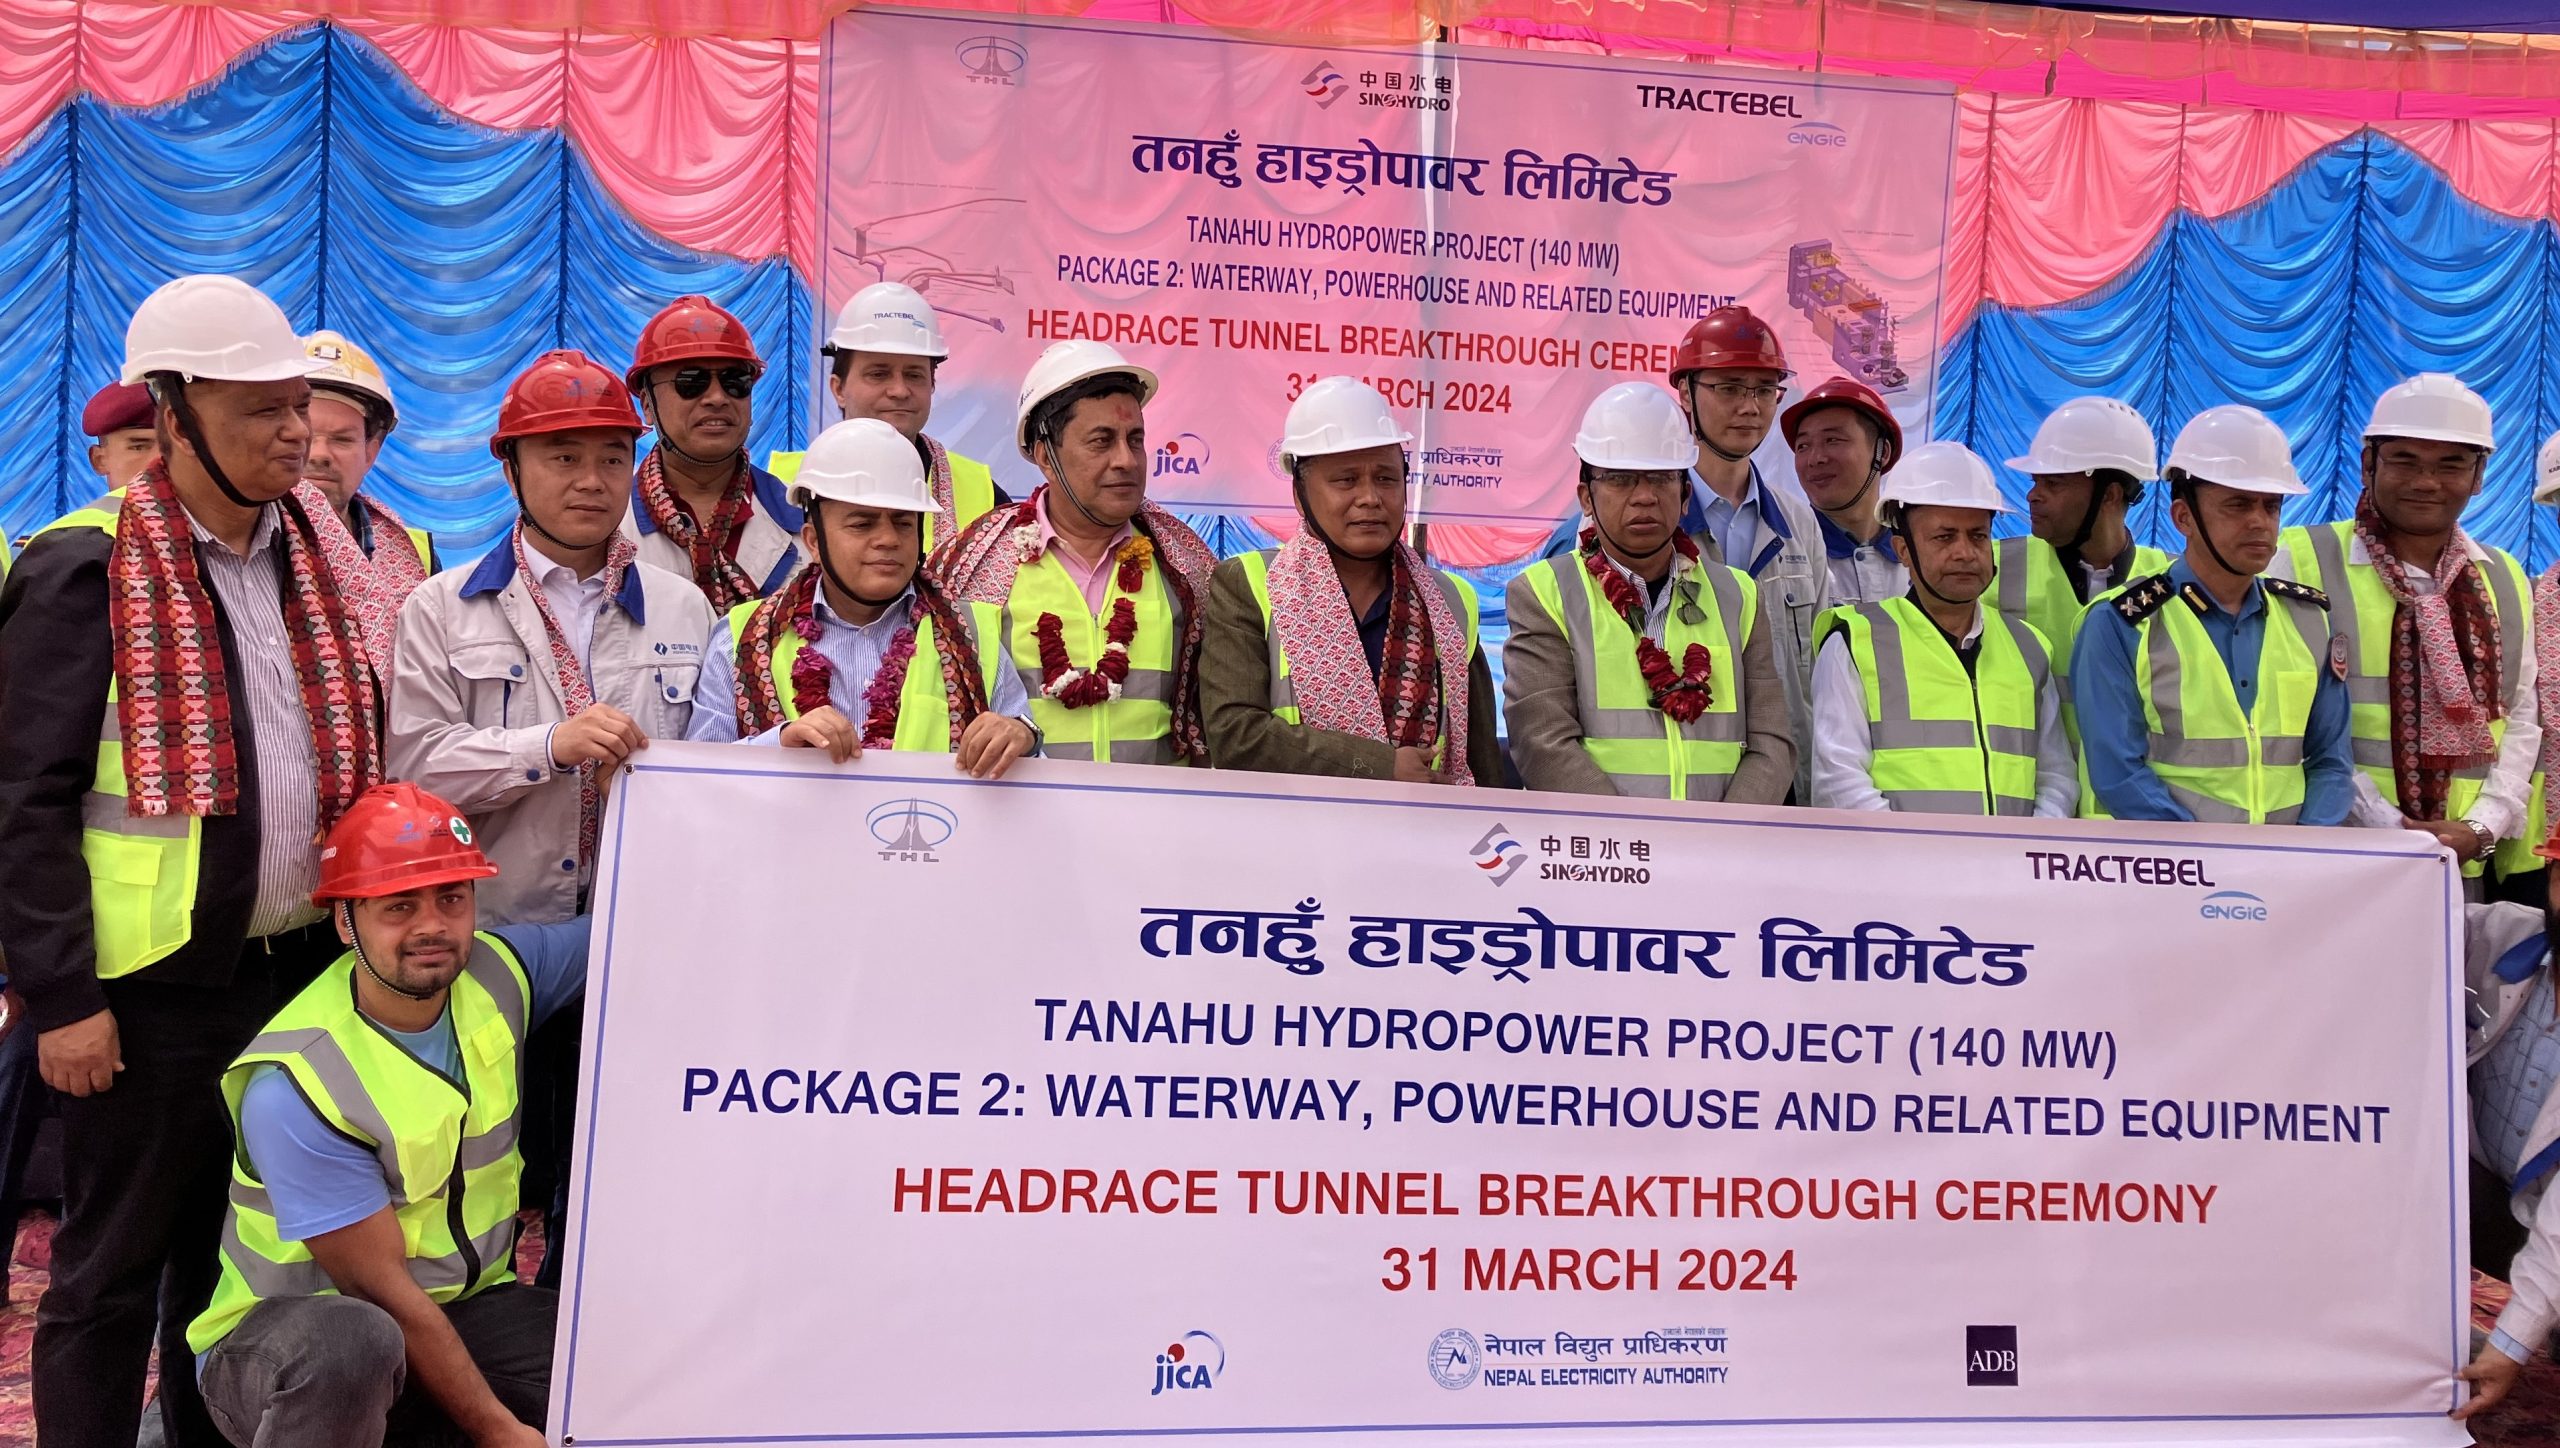 Major Milestone Achieved: Tanahun Hydropower Project’s main tunnel breakthrough